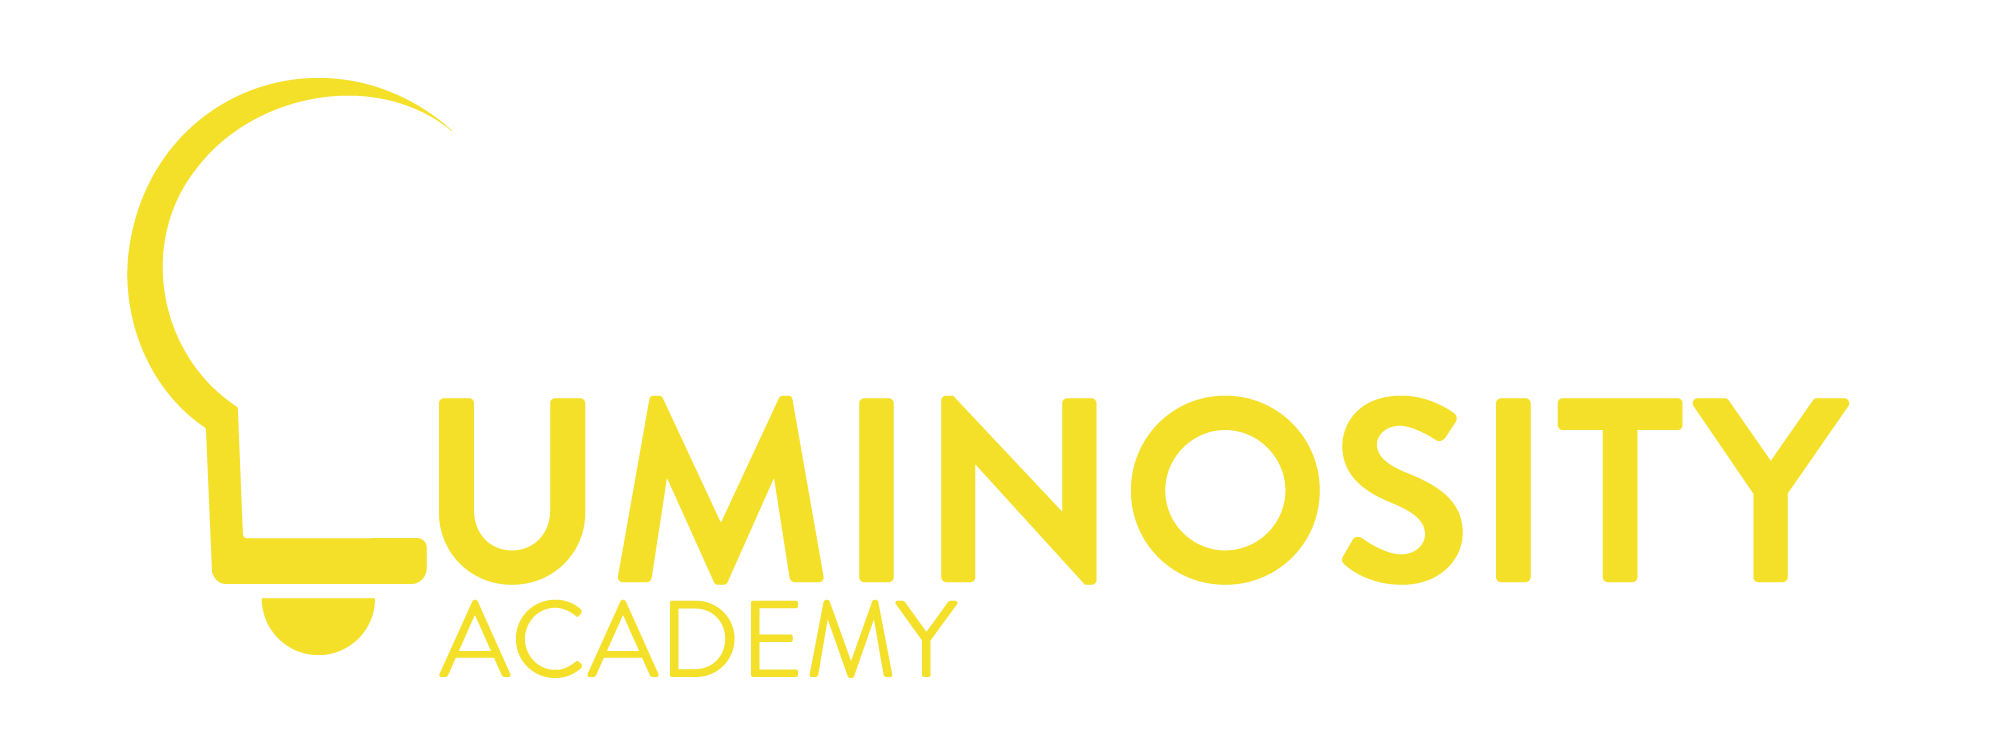 Luminosity Academy Logo